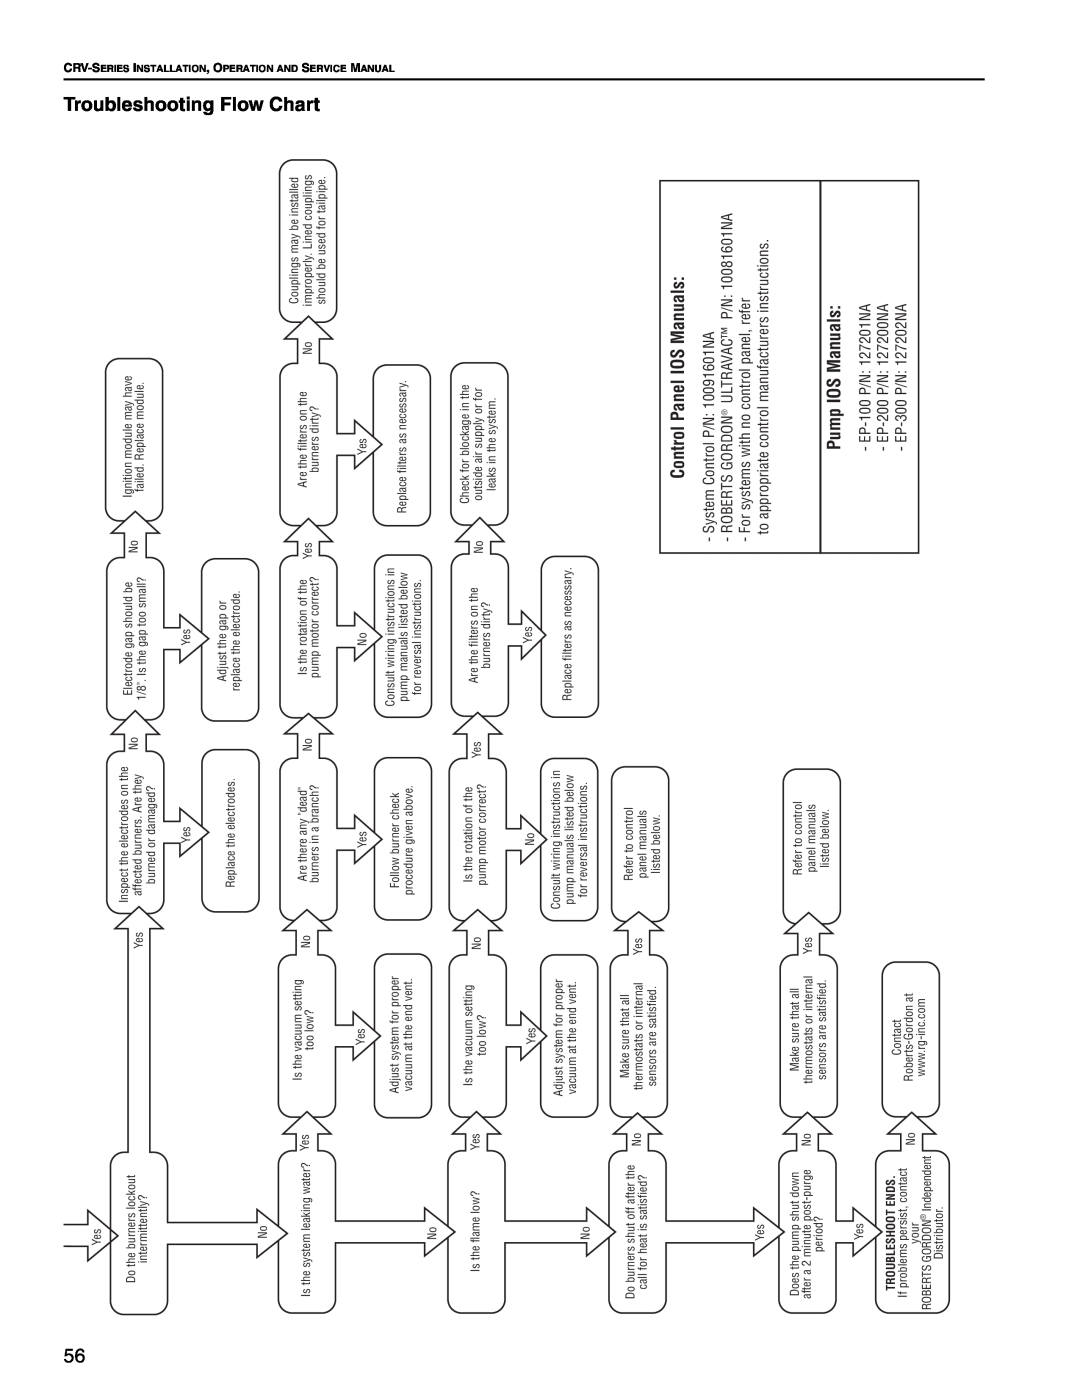 Roberts Gorden CRV-B-12 Troubleshooting Flow, Chart, Control Panel IOS Manuals, Pump IOS Manuals, Troubleshoot Ends 